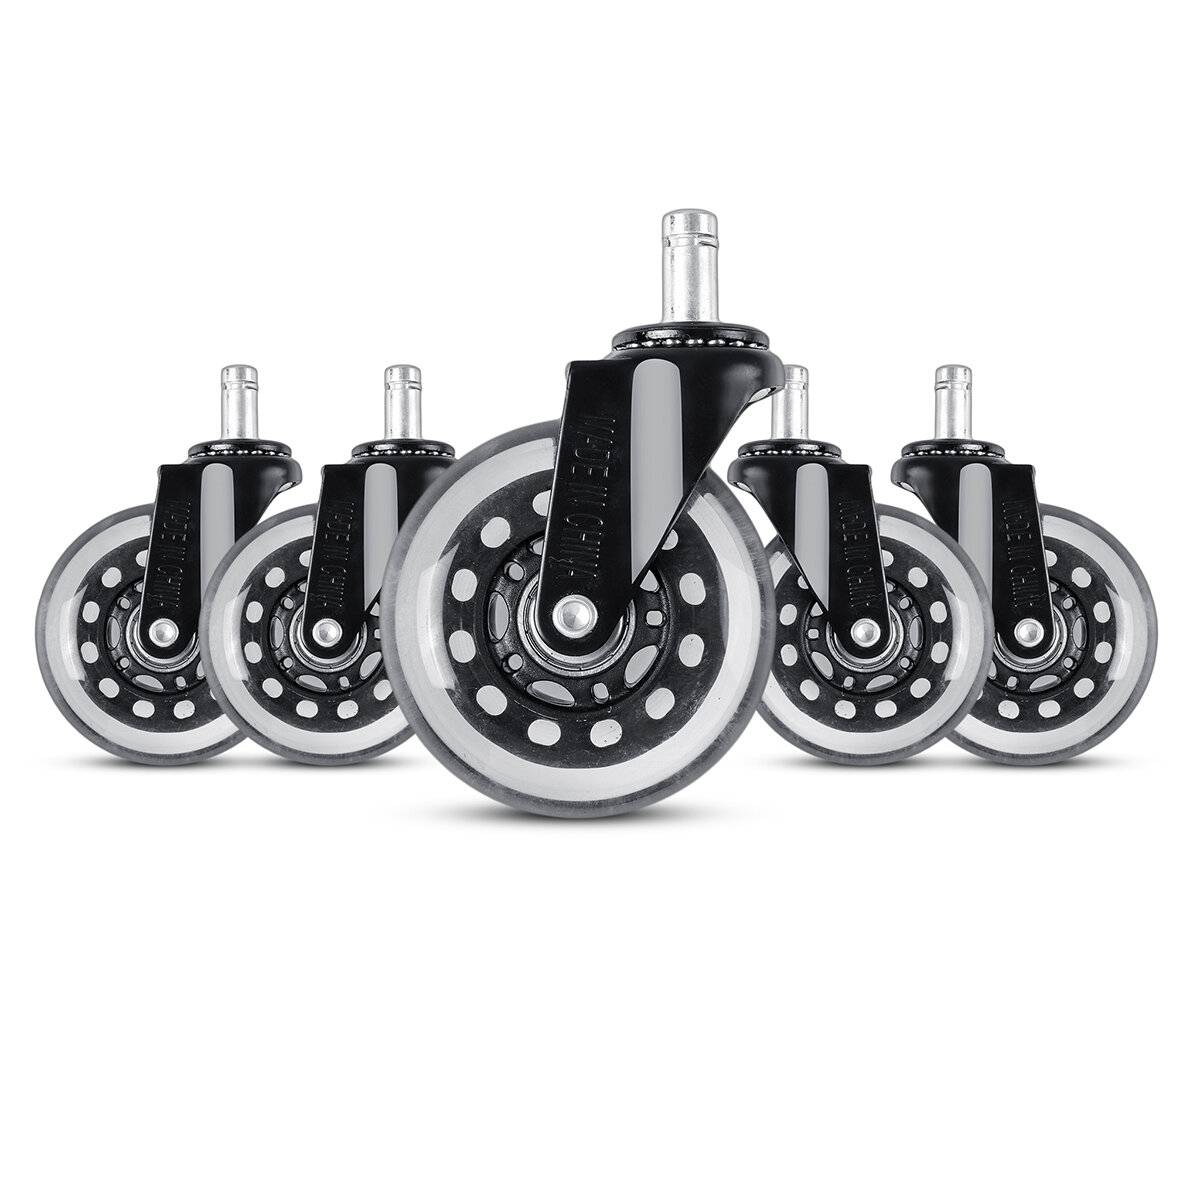 Full Range of <a href='/rubber-wheel/'>Rubber Wheel</a>, Solid Wheel, <a href='/foam/'>Foam</a> Wheel Factory - Wheel & Caster Accessories - Wheel & Caster - Industrial Equipment & Components - Products - Dgqiaoshengsp.com